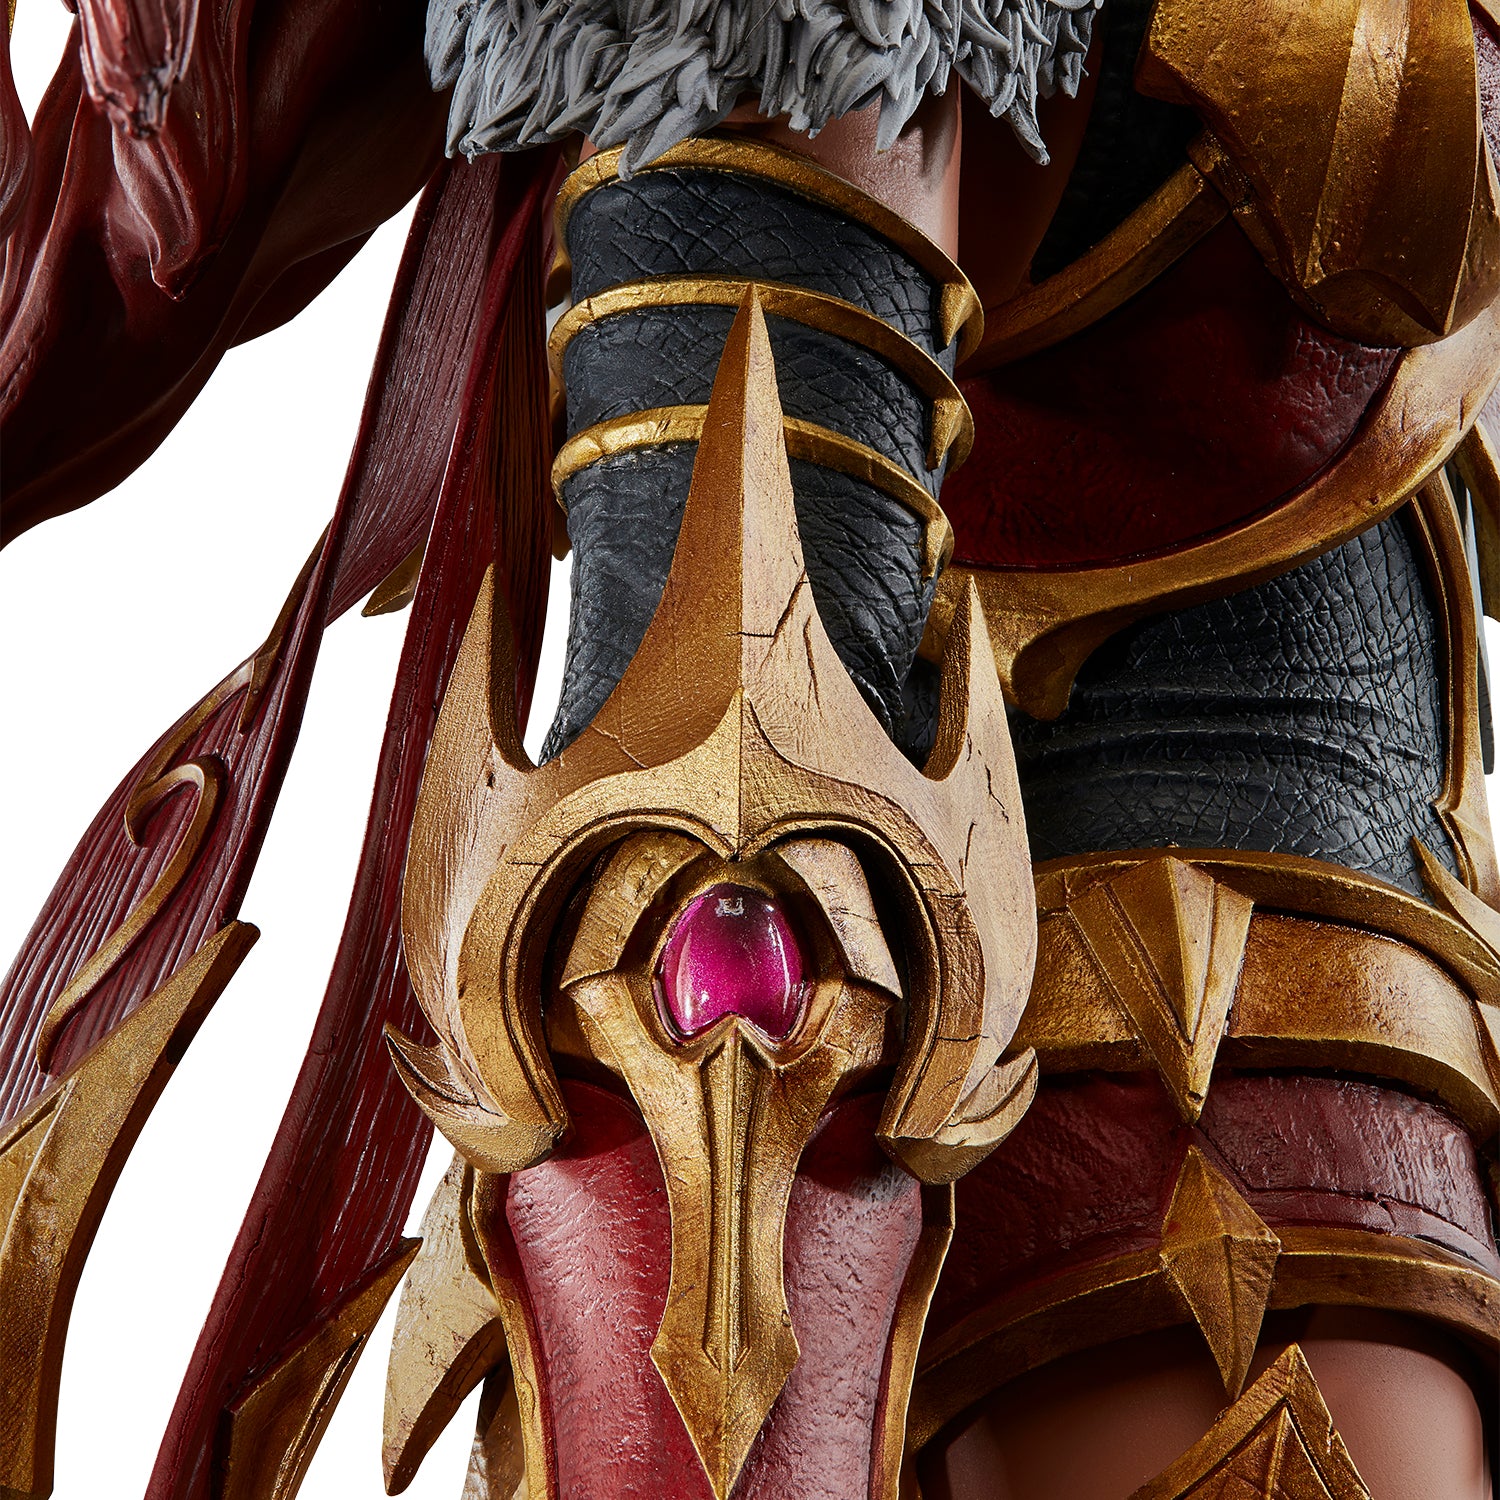 World of Warcraft Alexstrasza 20in Statue - Armor Details